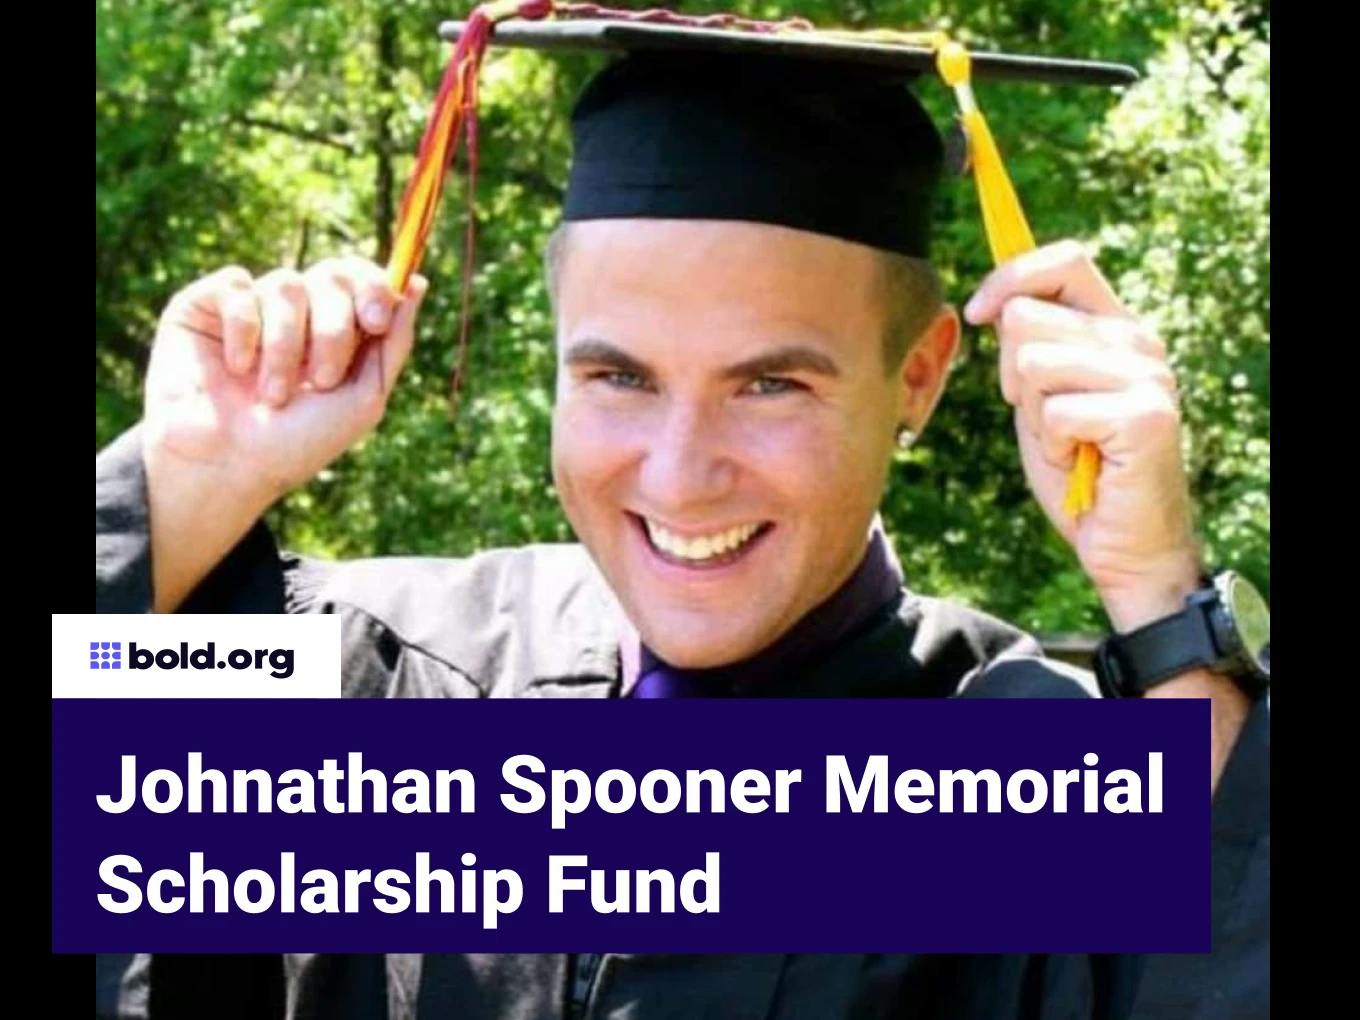 Johnathan Spooner Memorial Scholarship Fund